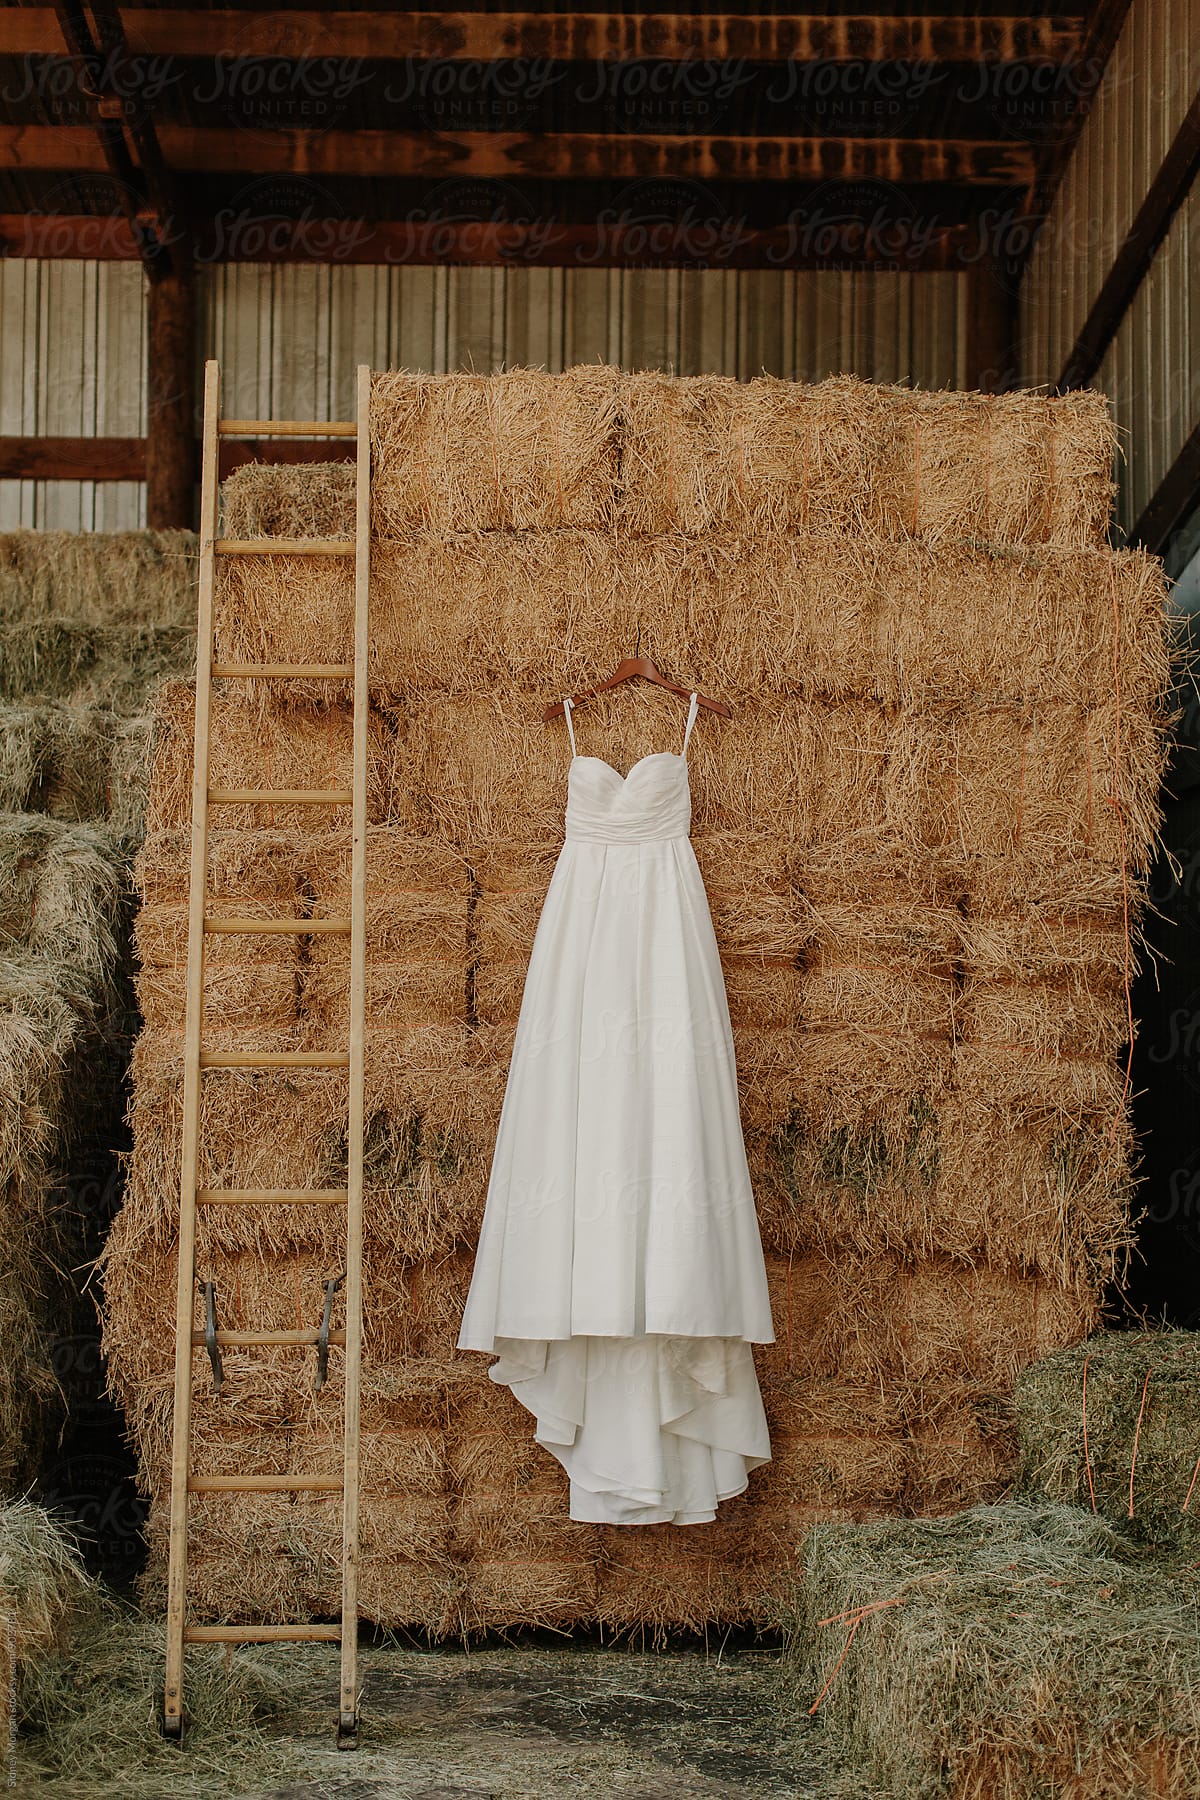 Wedding Dress in Barn